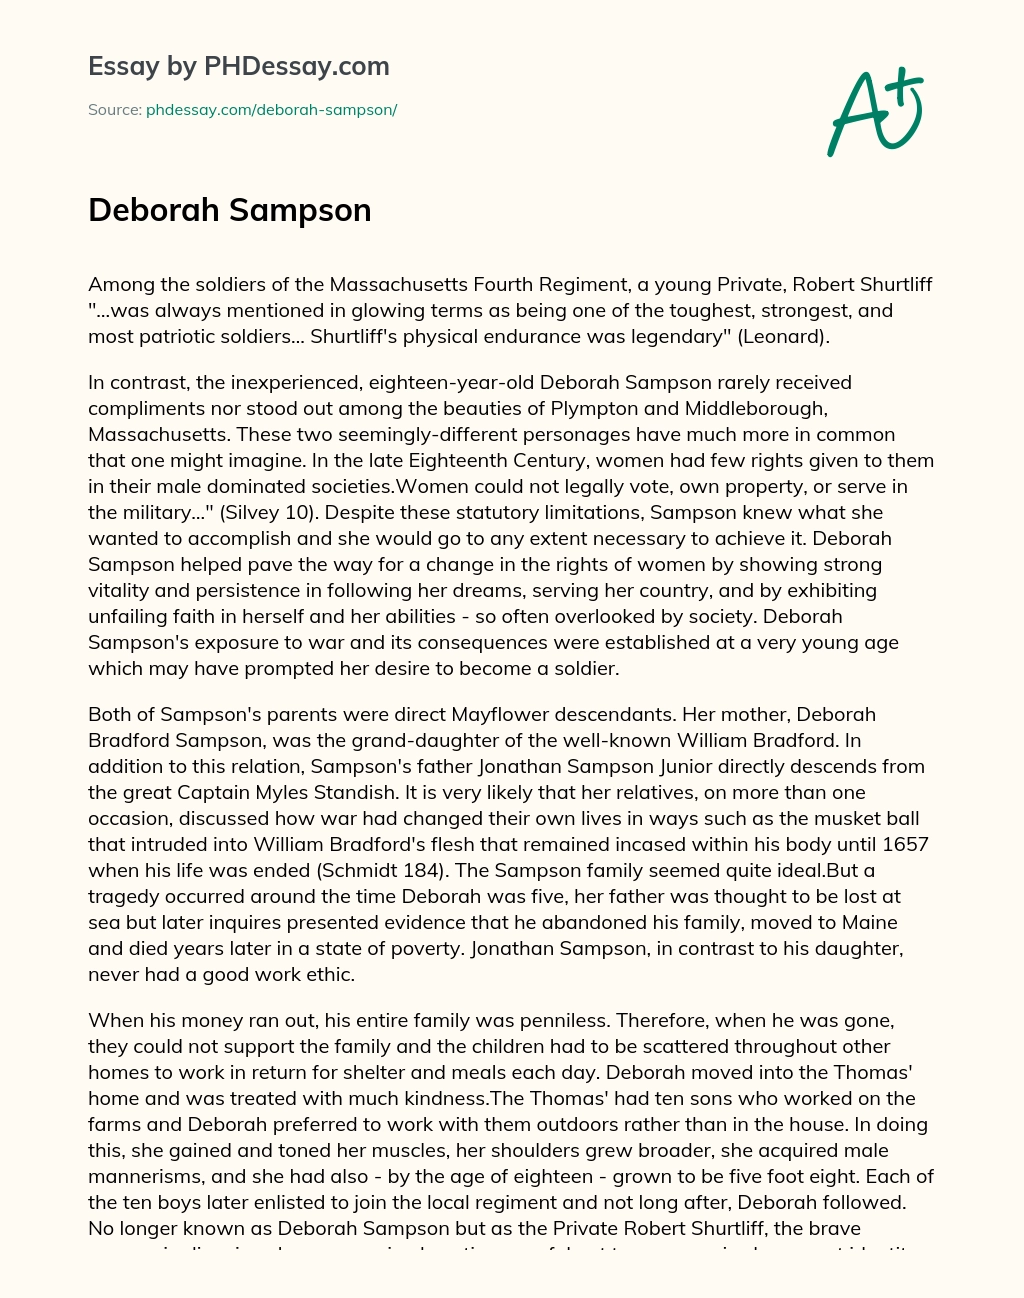 Deborah Sampson essay